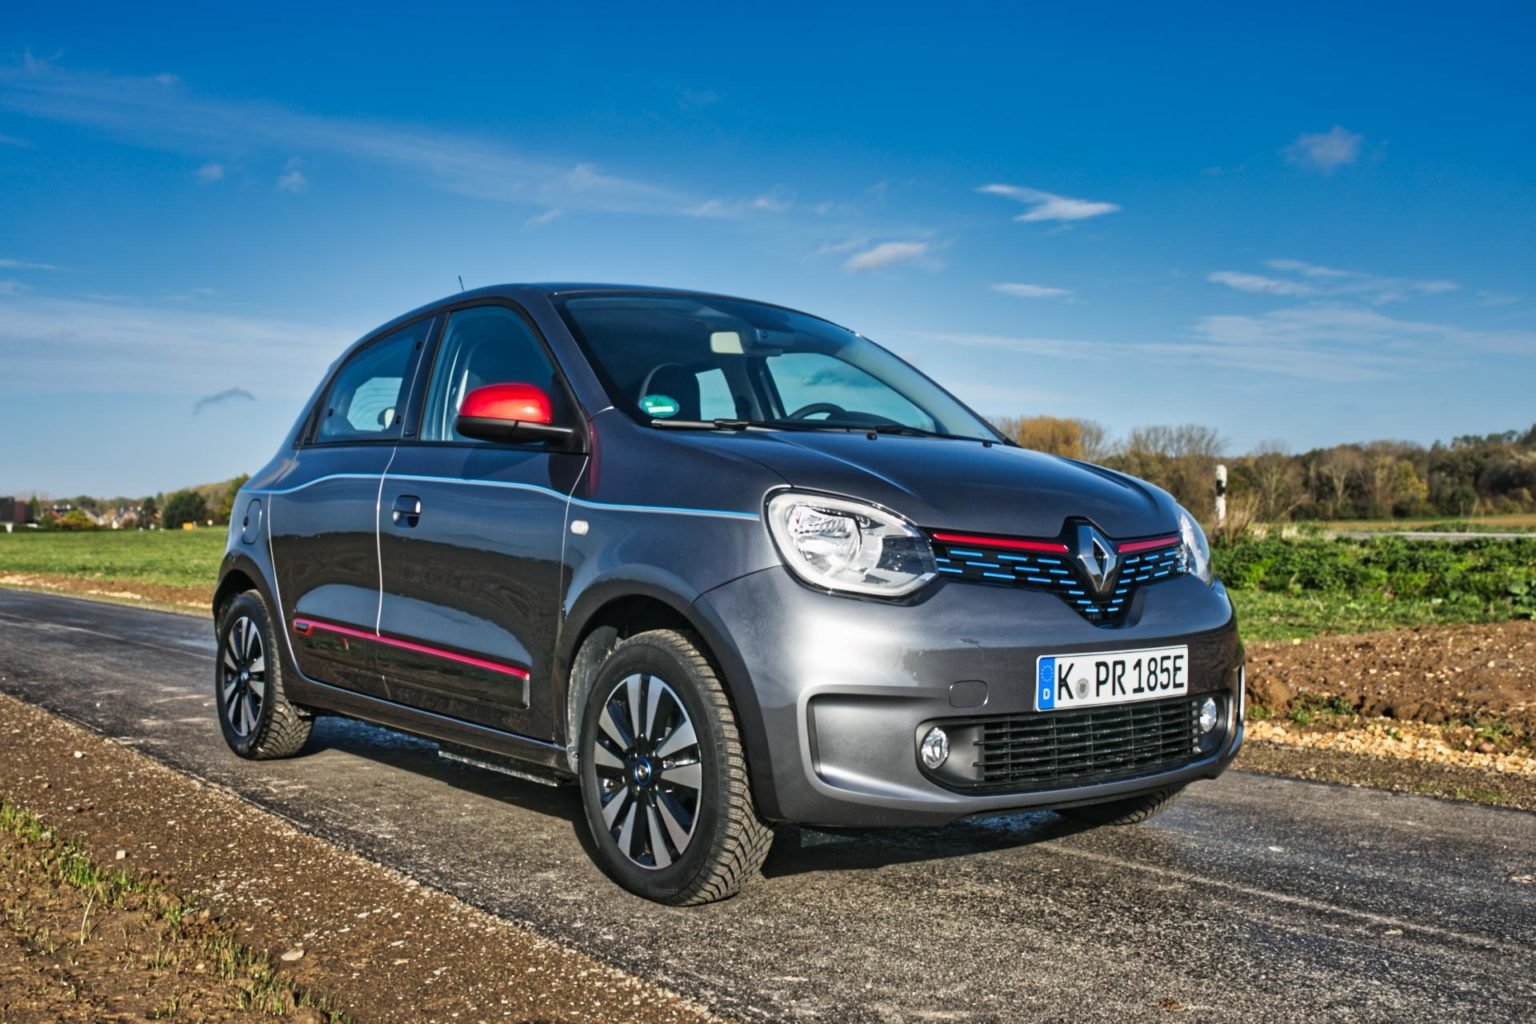 Renault TWINGO Electric: E-Auto mit bis zu 250 Kilometer